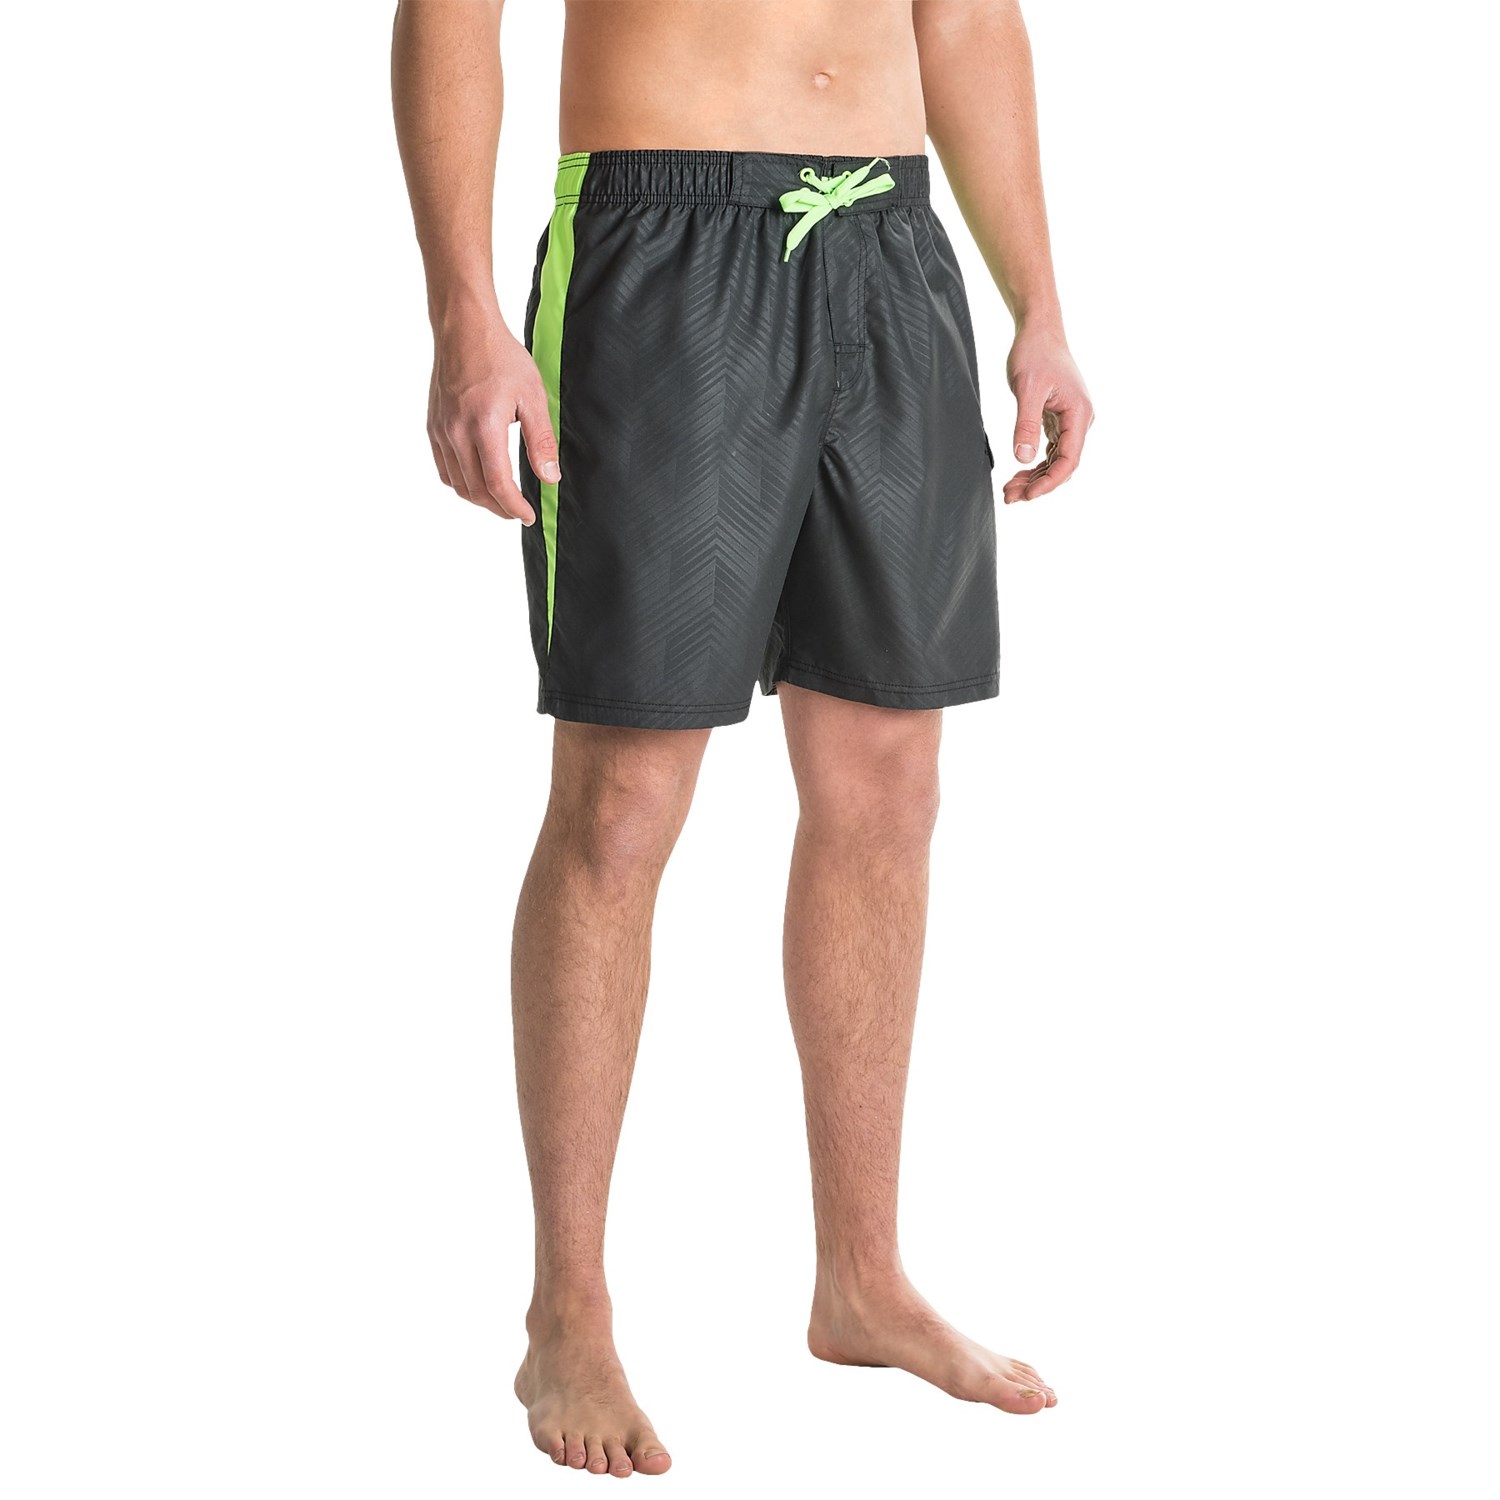 RBX Side Stripe Swim Trunks (For Men) - Save 53%